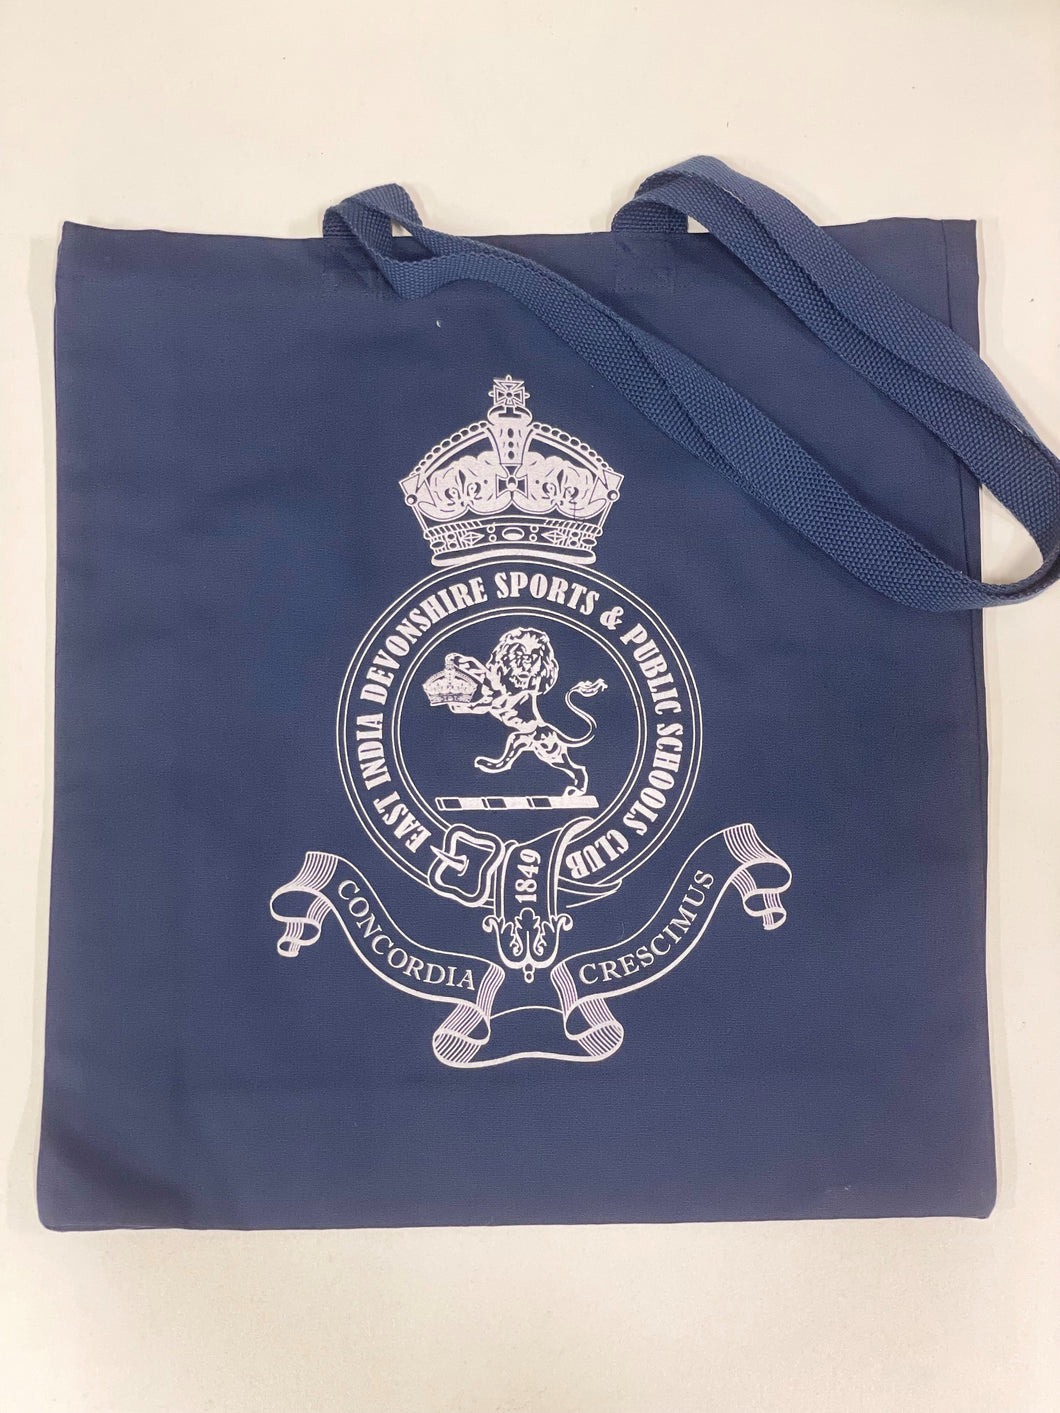 East India Club Tote Bag